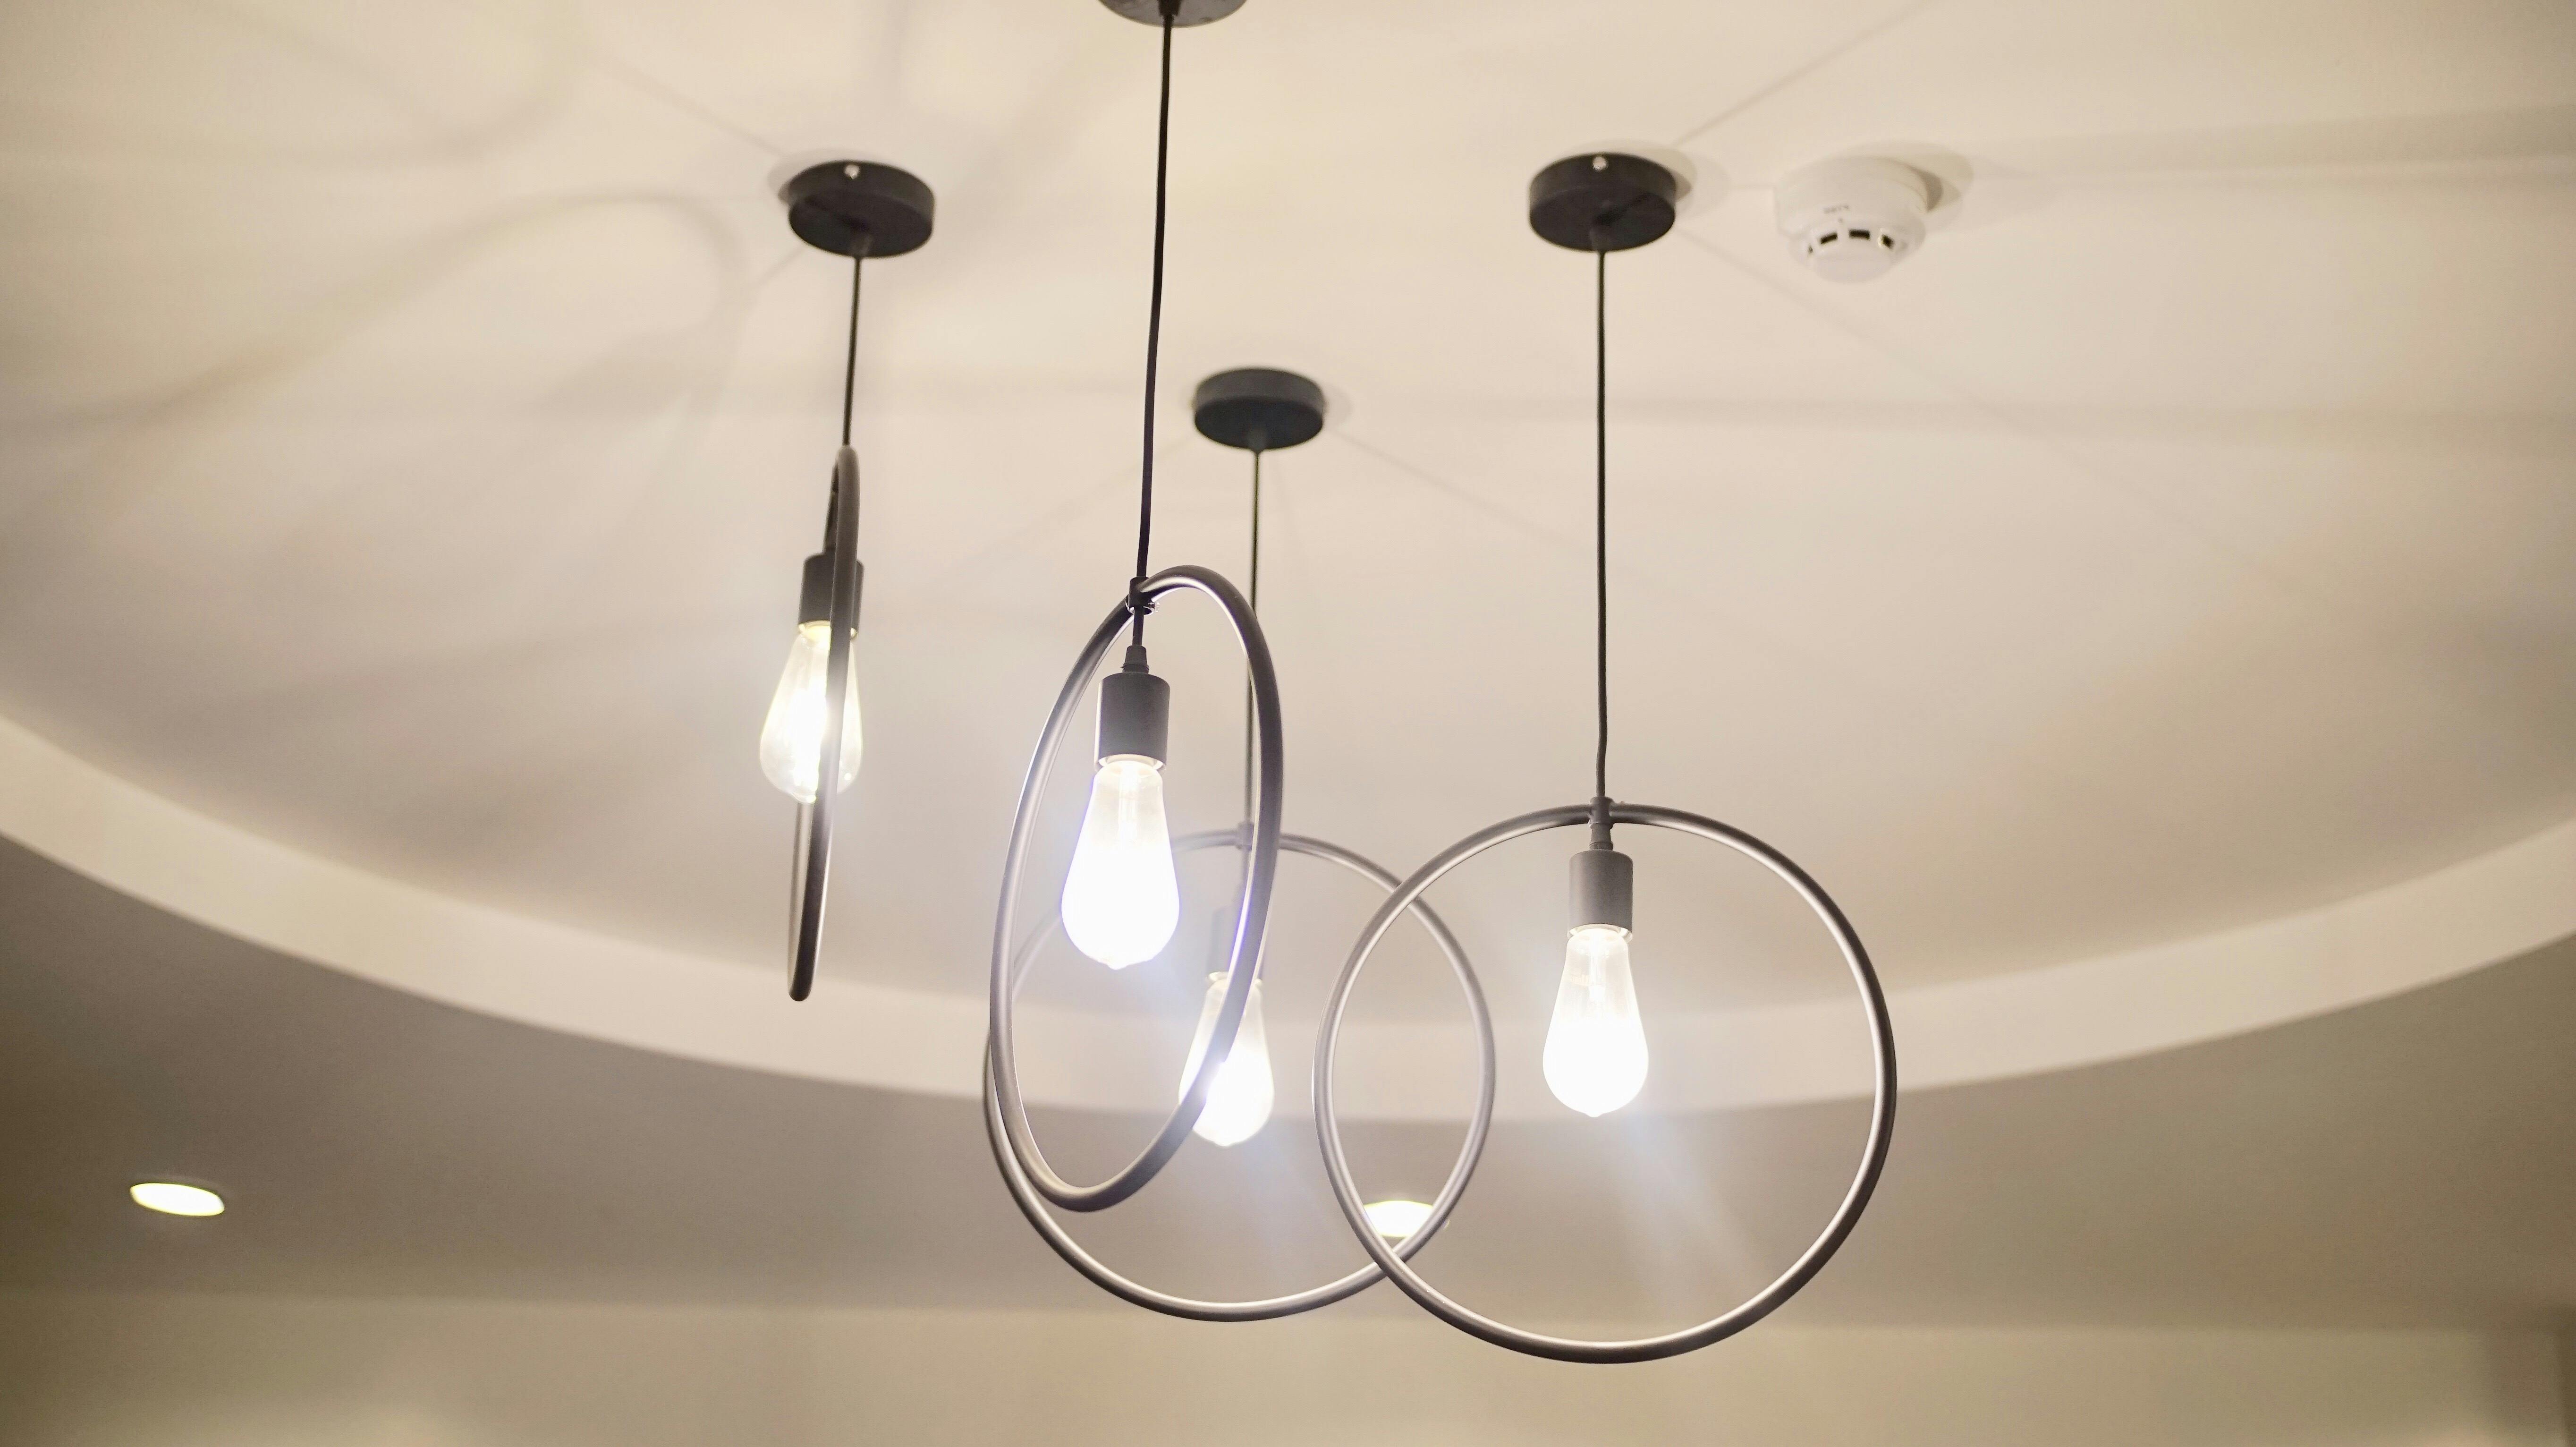 Free stock photo of ceiling lights, Drop Lamp, lighting